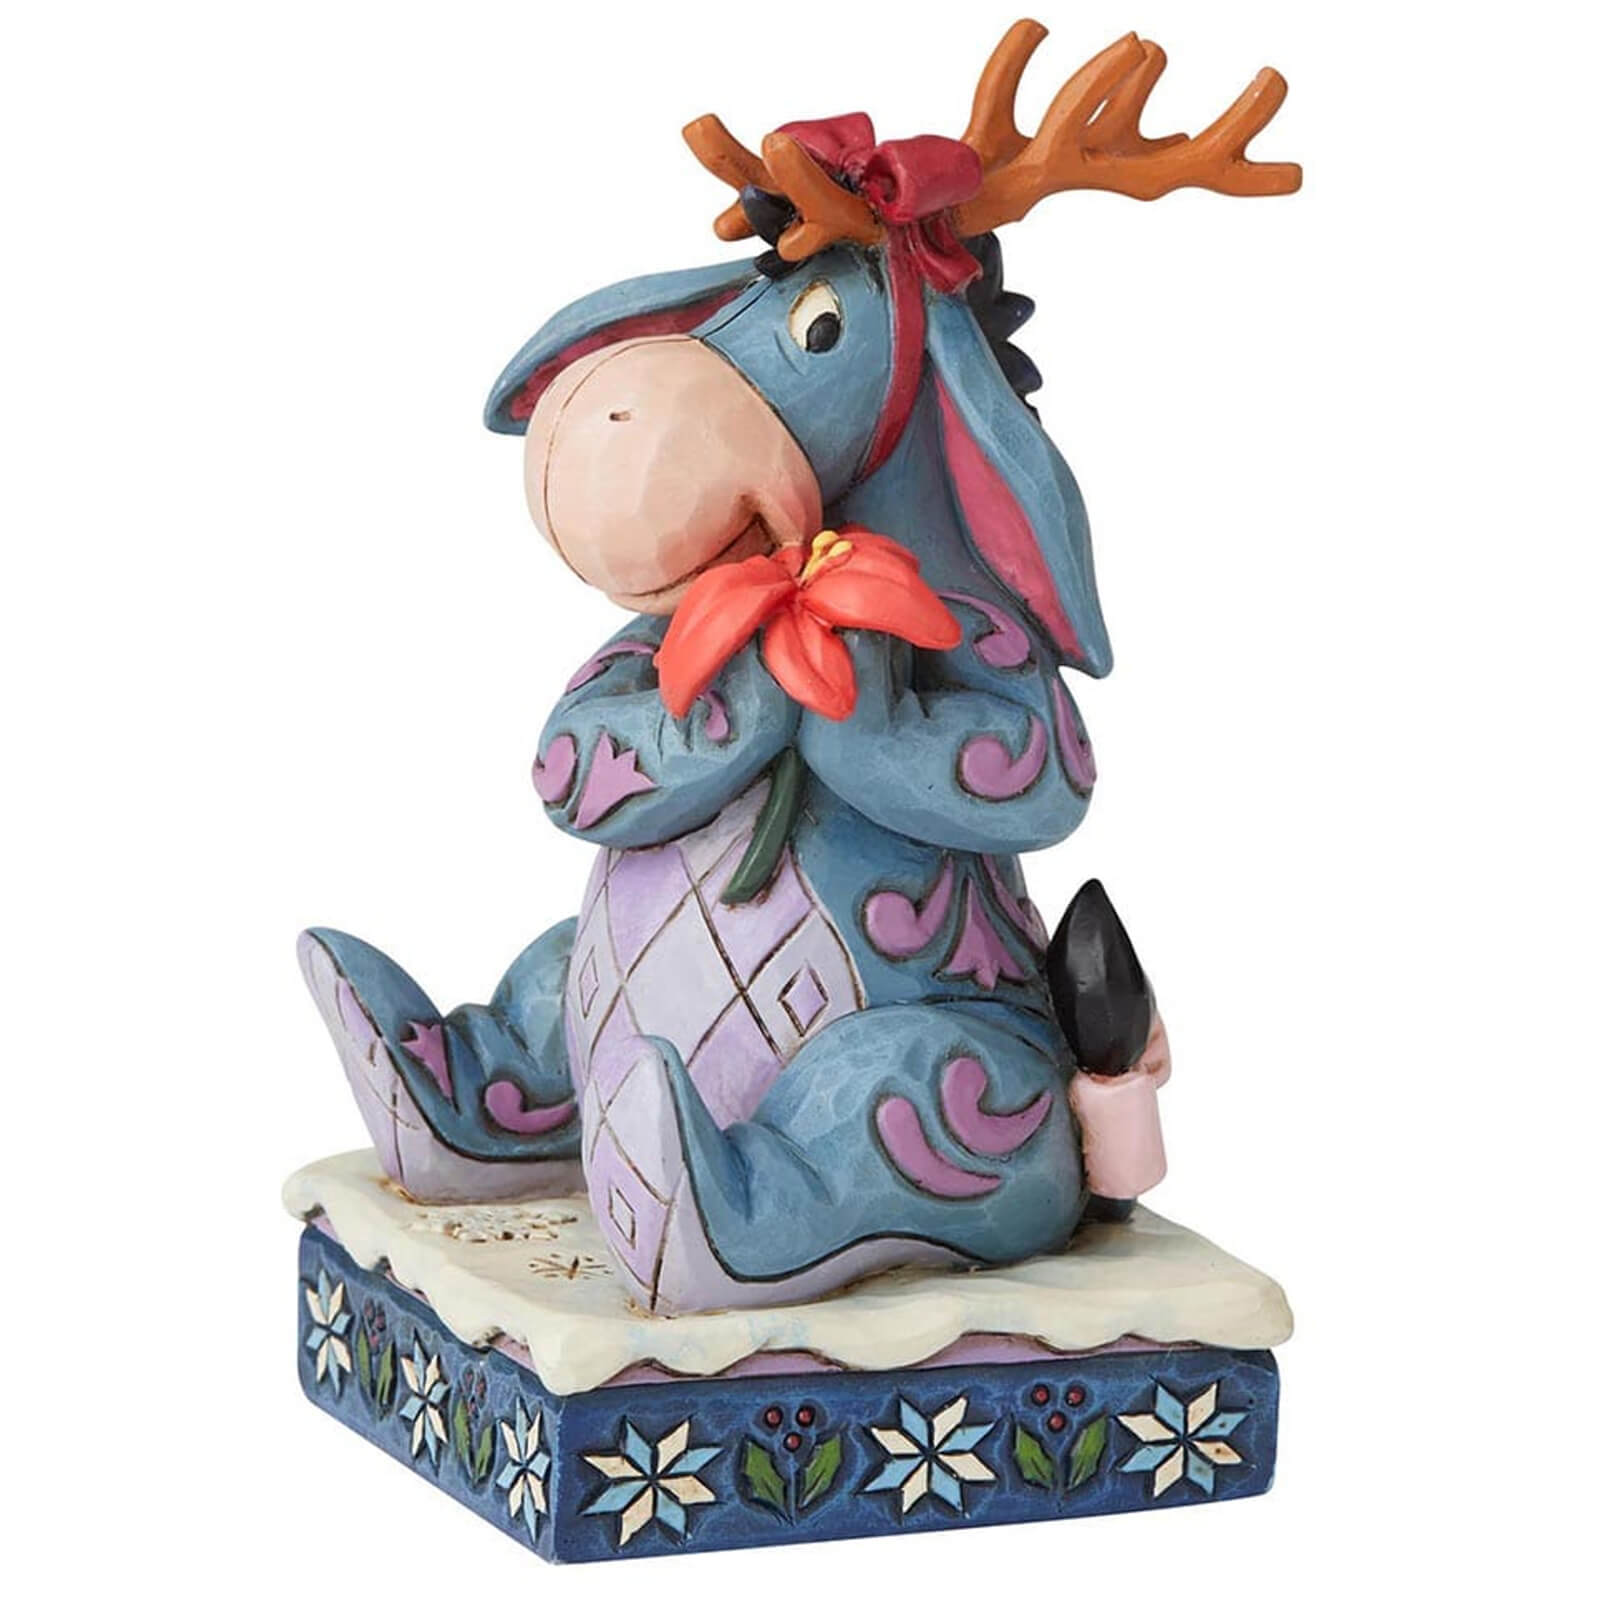 Enesco Disney Traditions Winter Wonders (Eeyore Christmas Figurine)